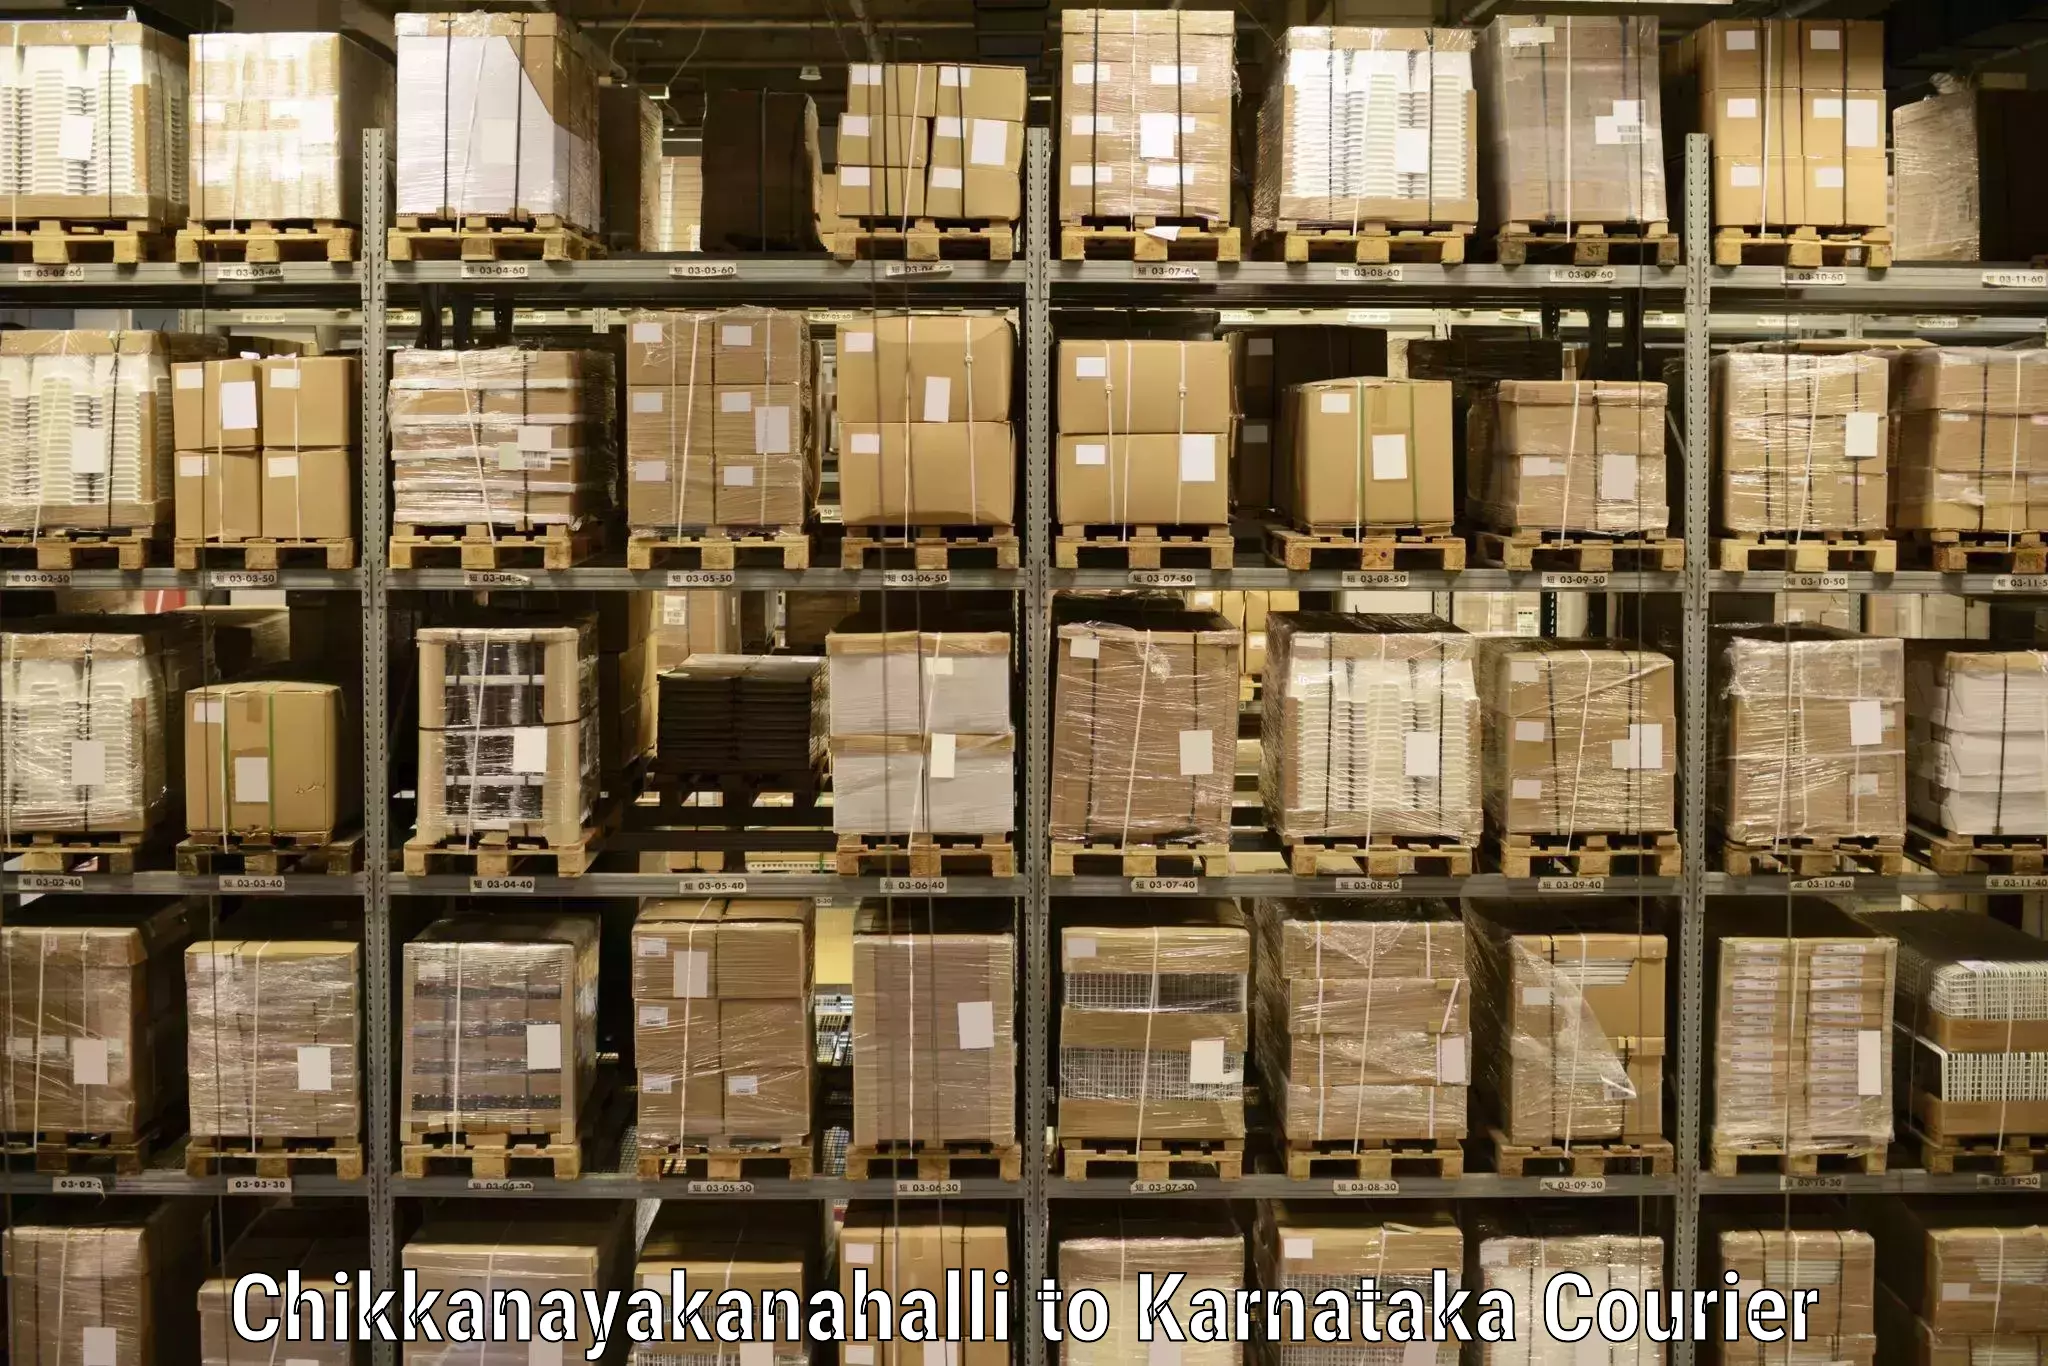 Professional parcel services Chikkanayakanahalli to Ullal